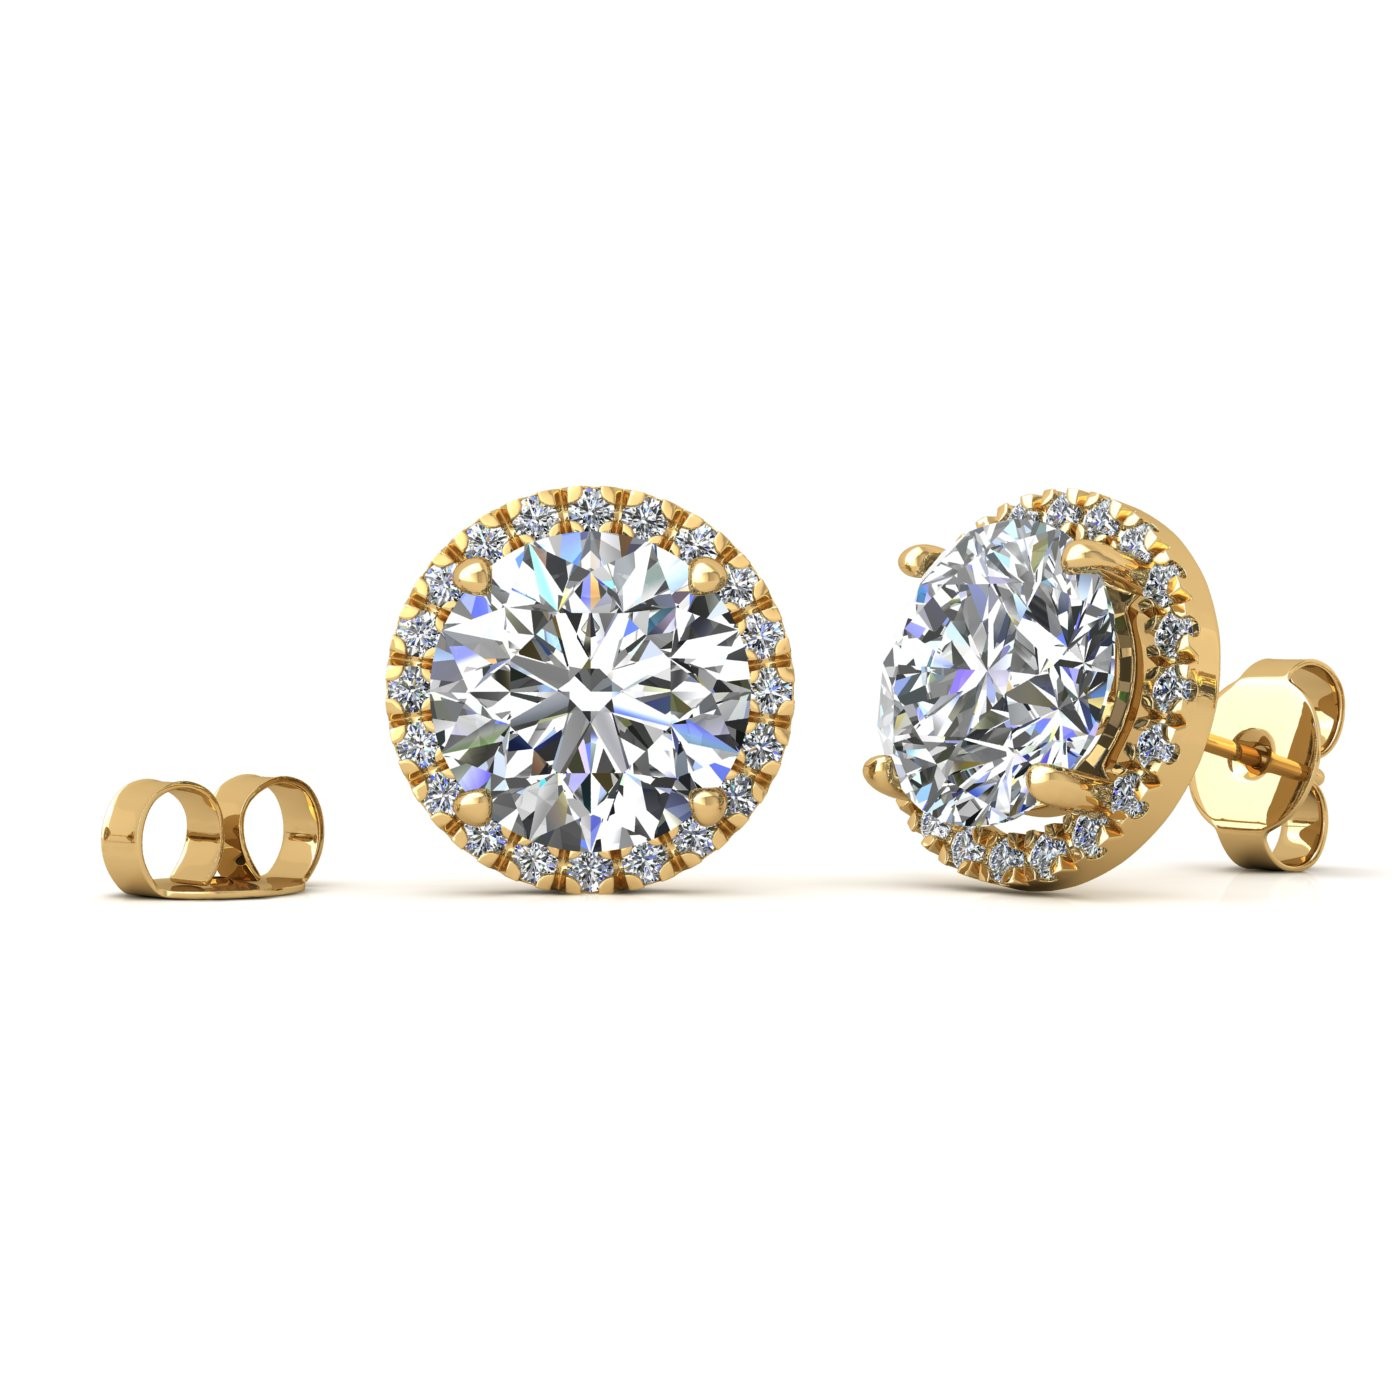 18k yellow gold  0,7 ct each (1,4 tcw) 4 prongs round shape diamond earrings with diamond pavÉ set halo Photos & images